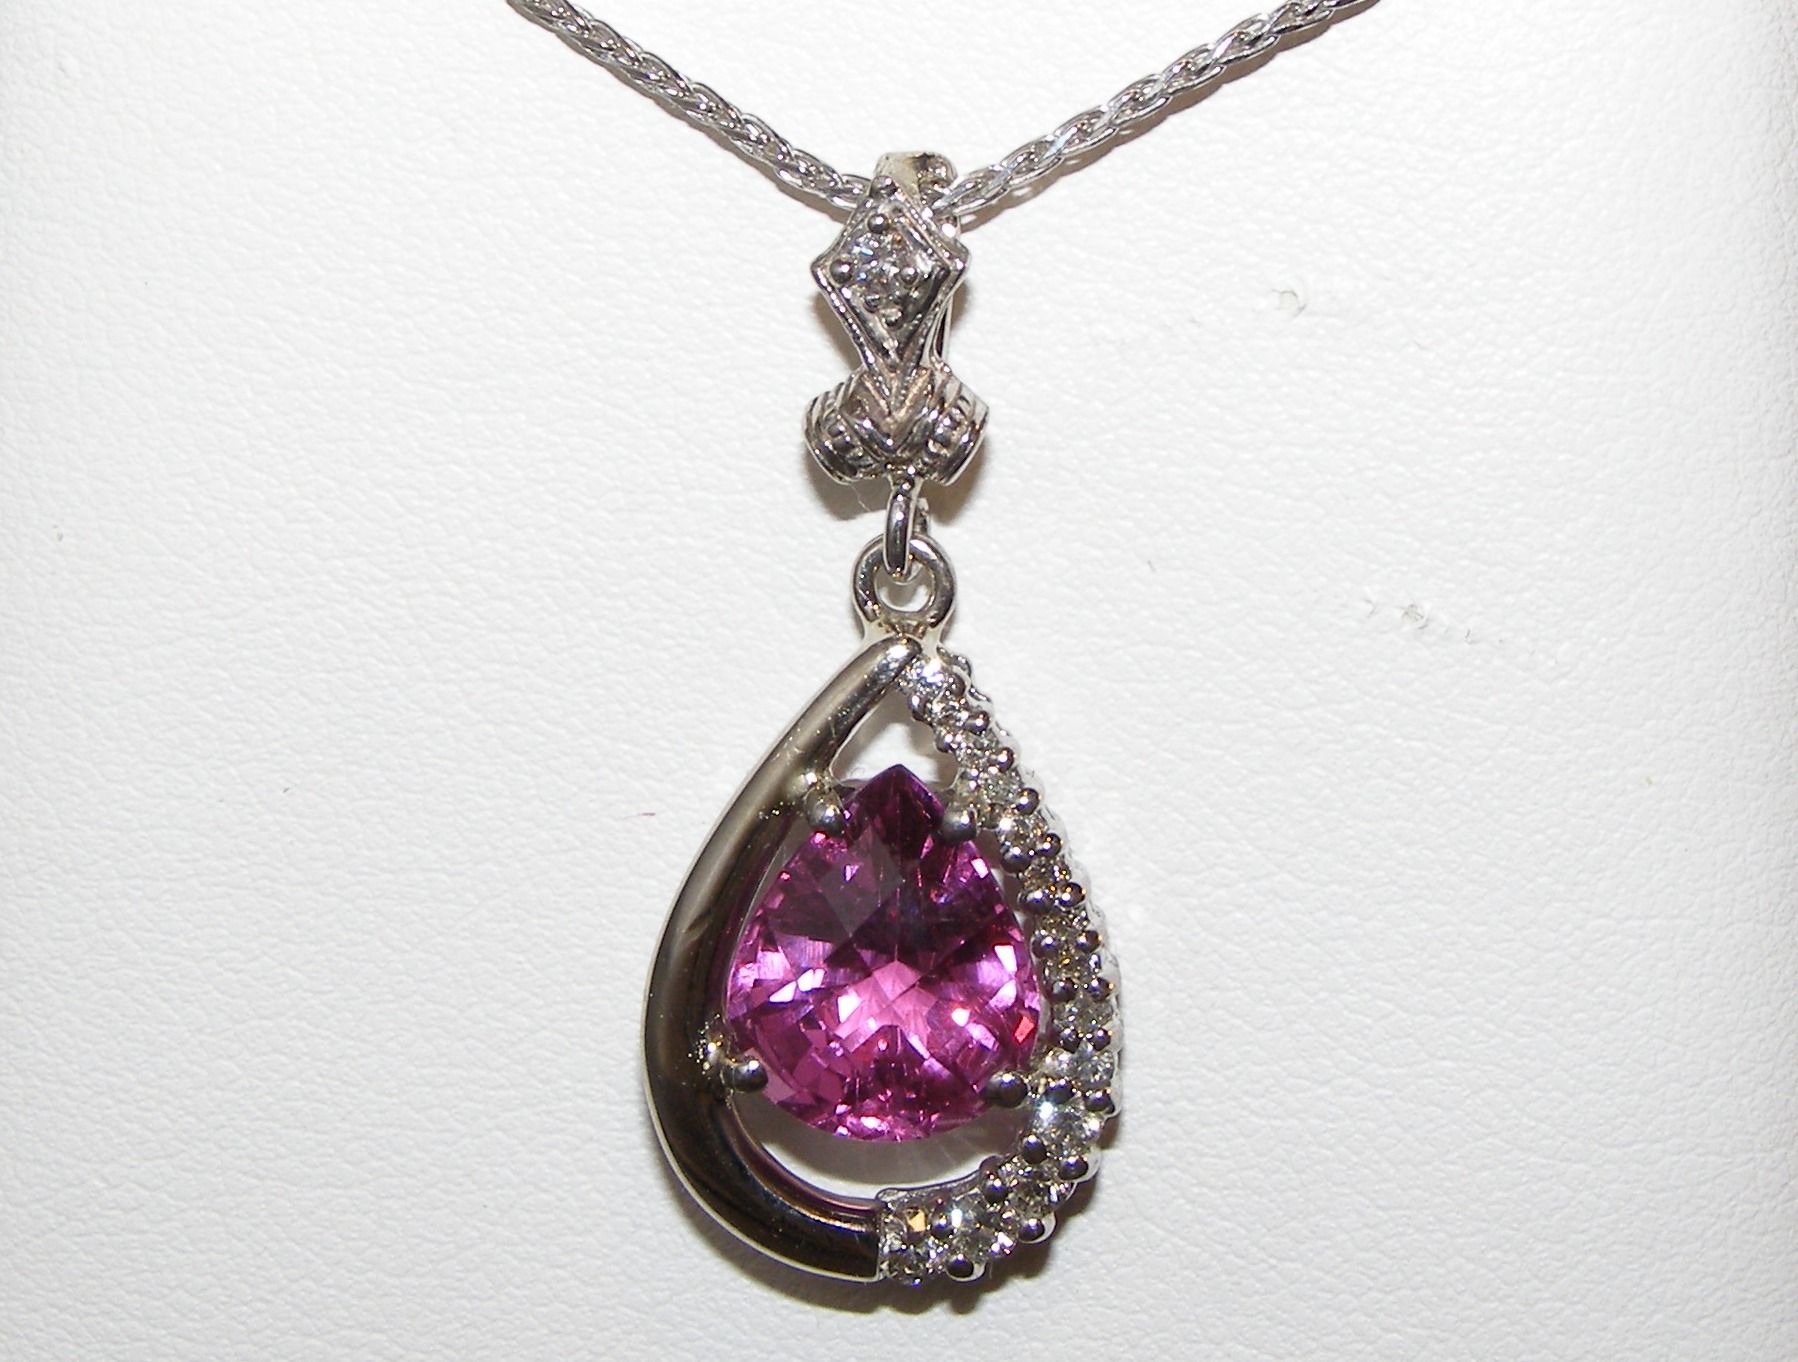 Exquisite AAA+ Rhodolite Diamond Pendant 14KWG 5.13 ctw